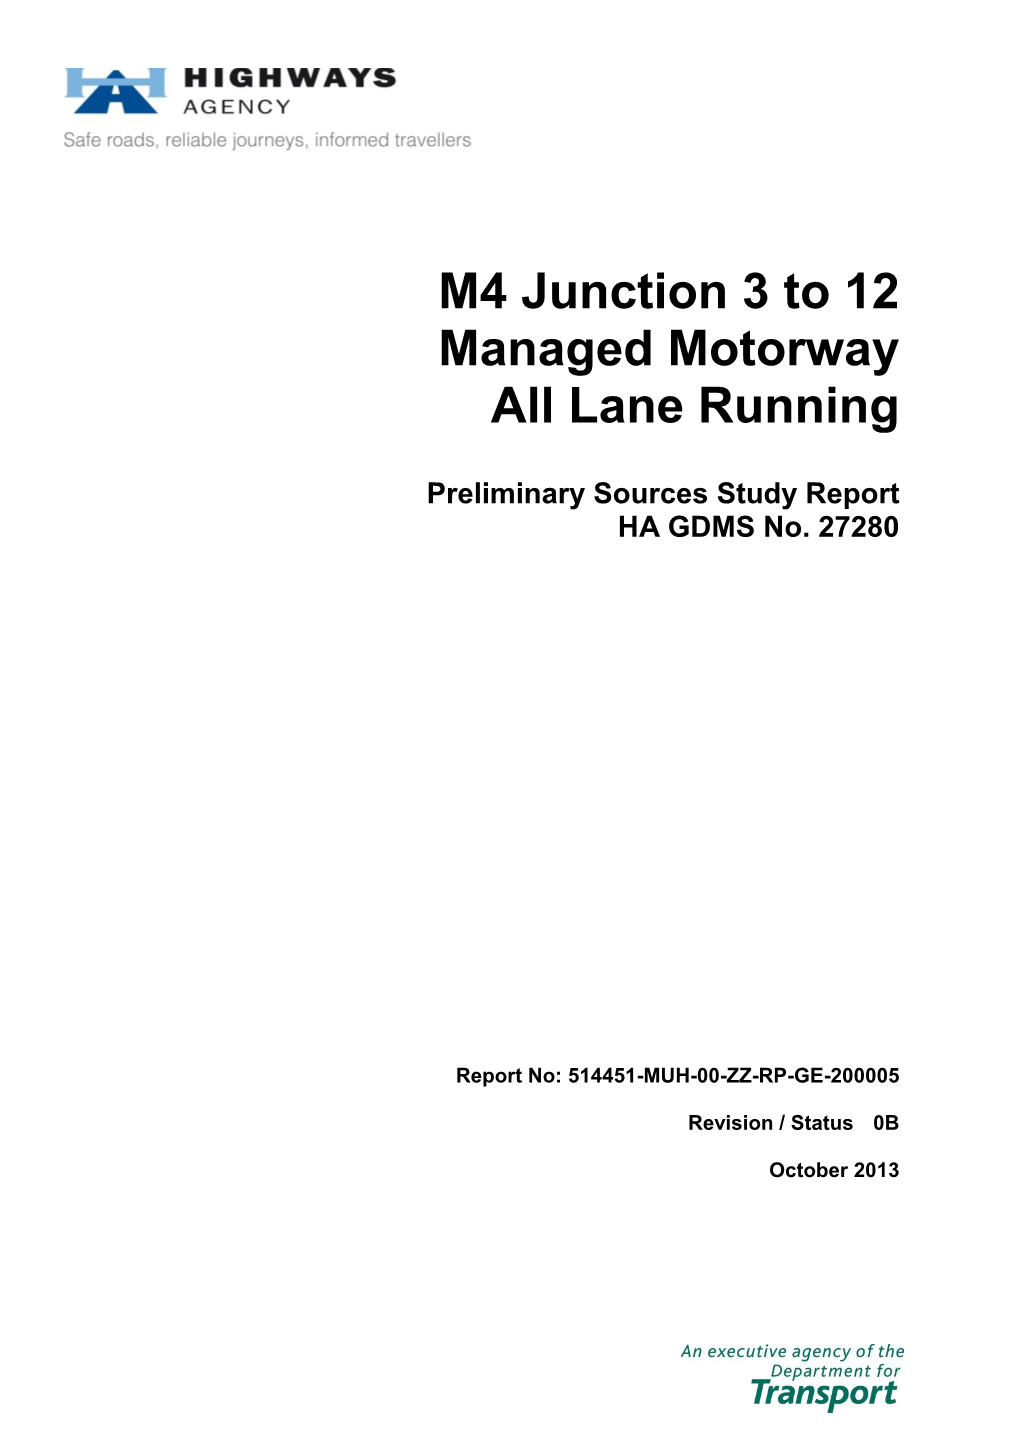 M4 Junction 3 to 12 Managed Motorway All Lane Running